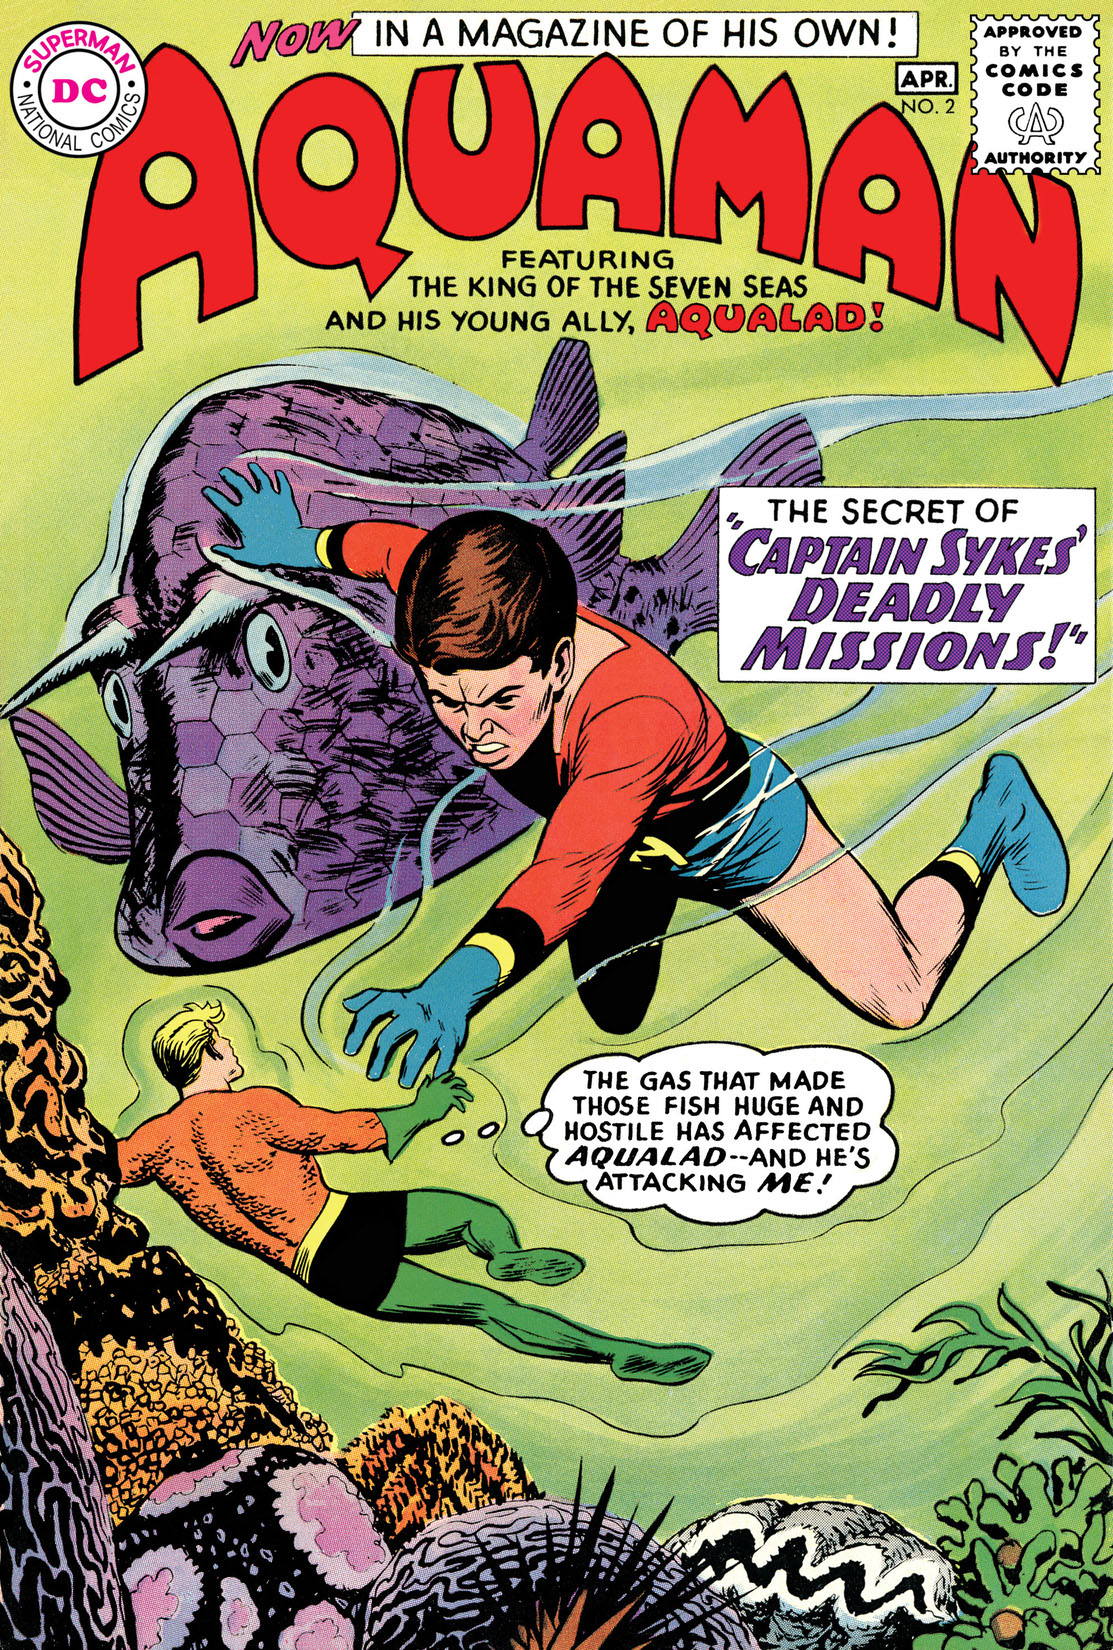 Aquaman (1962-) #2 preview images